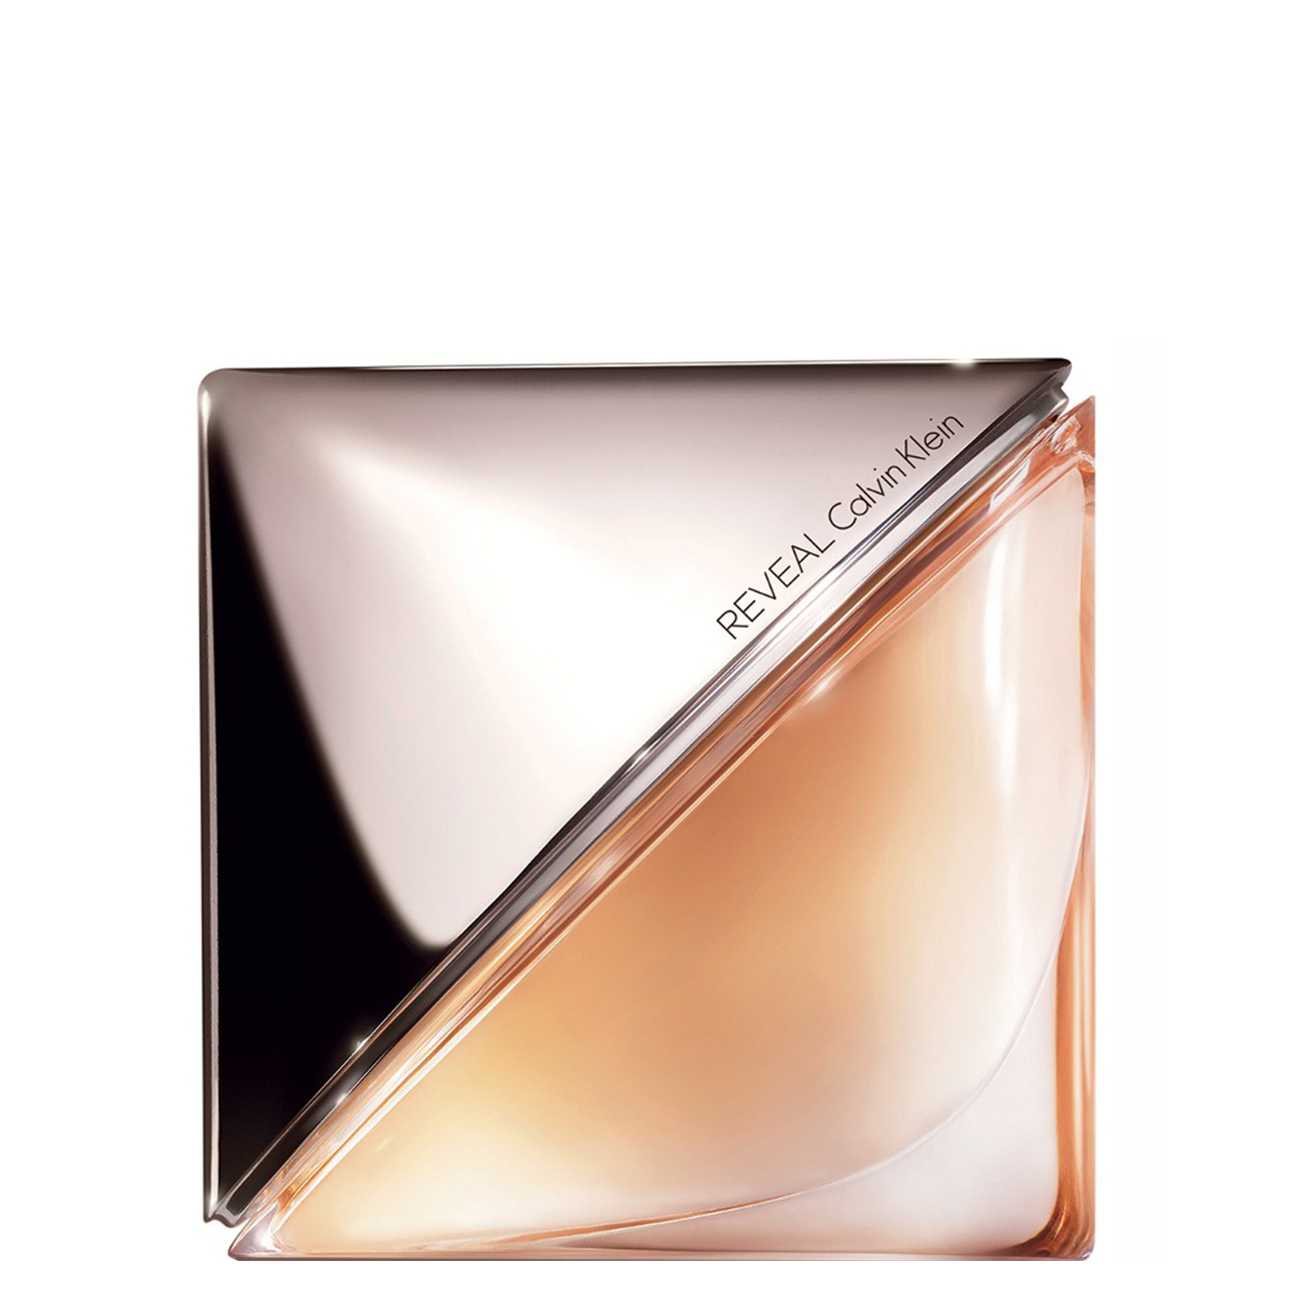 Apa de Parfum Calvin Klein REVEAL 100ml cu comanda online